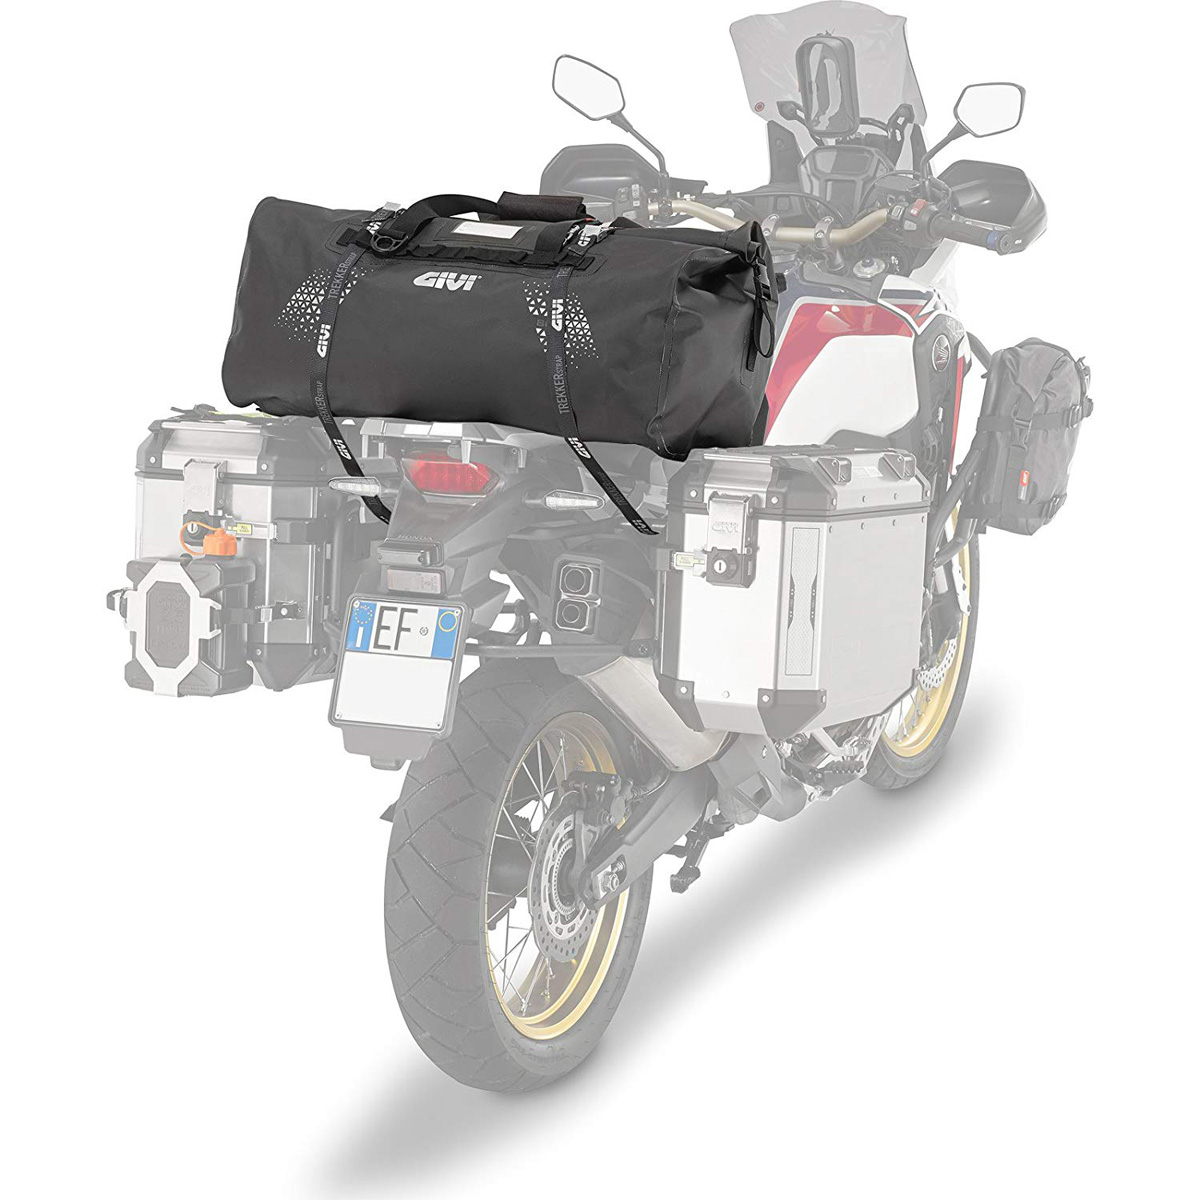 GIVI Borsone Cargo impermeabile Moto waterproof 80 litri UT804